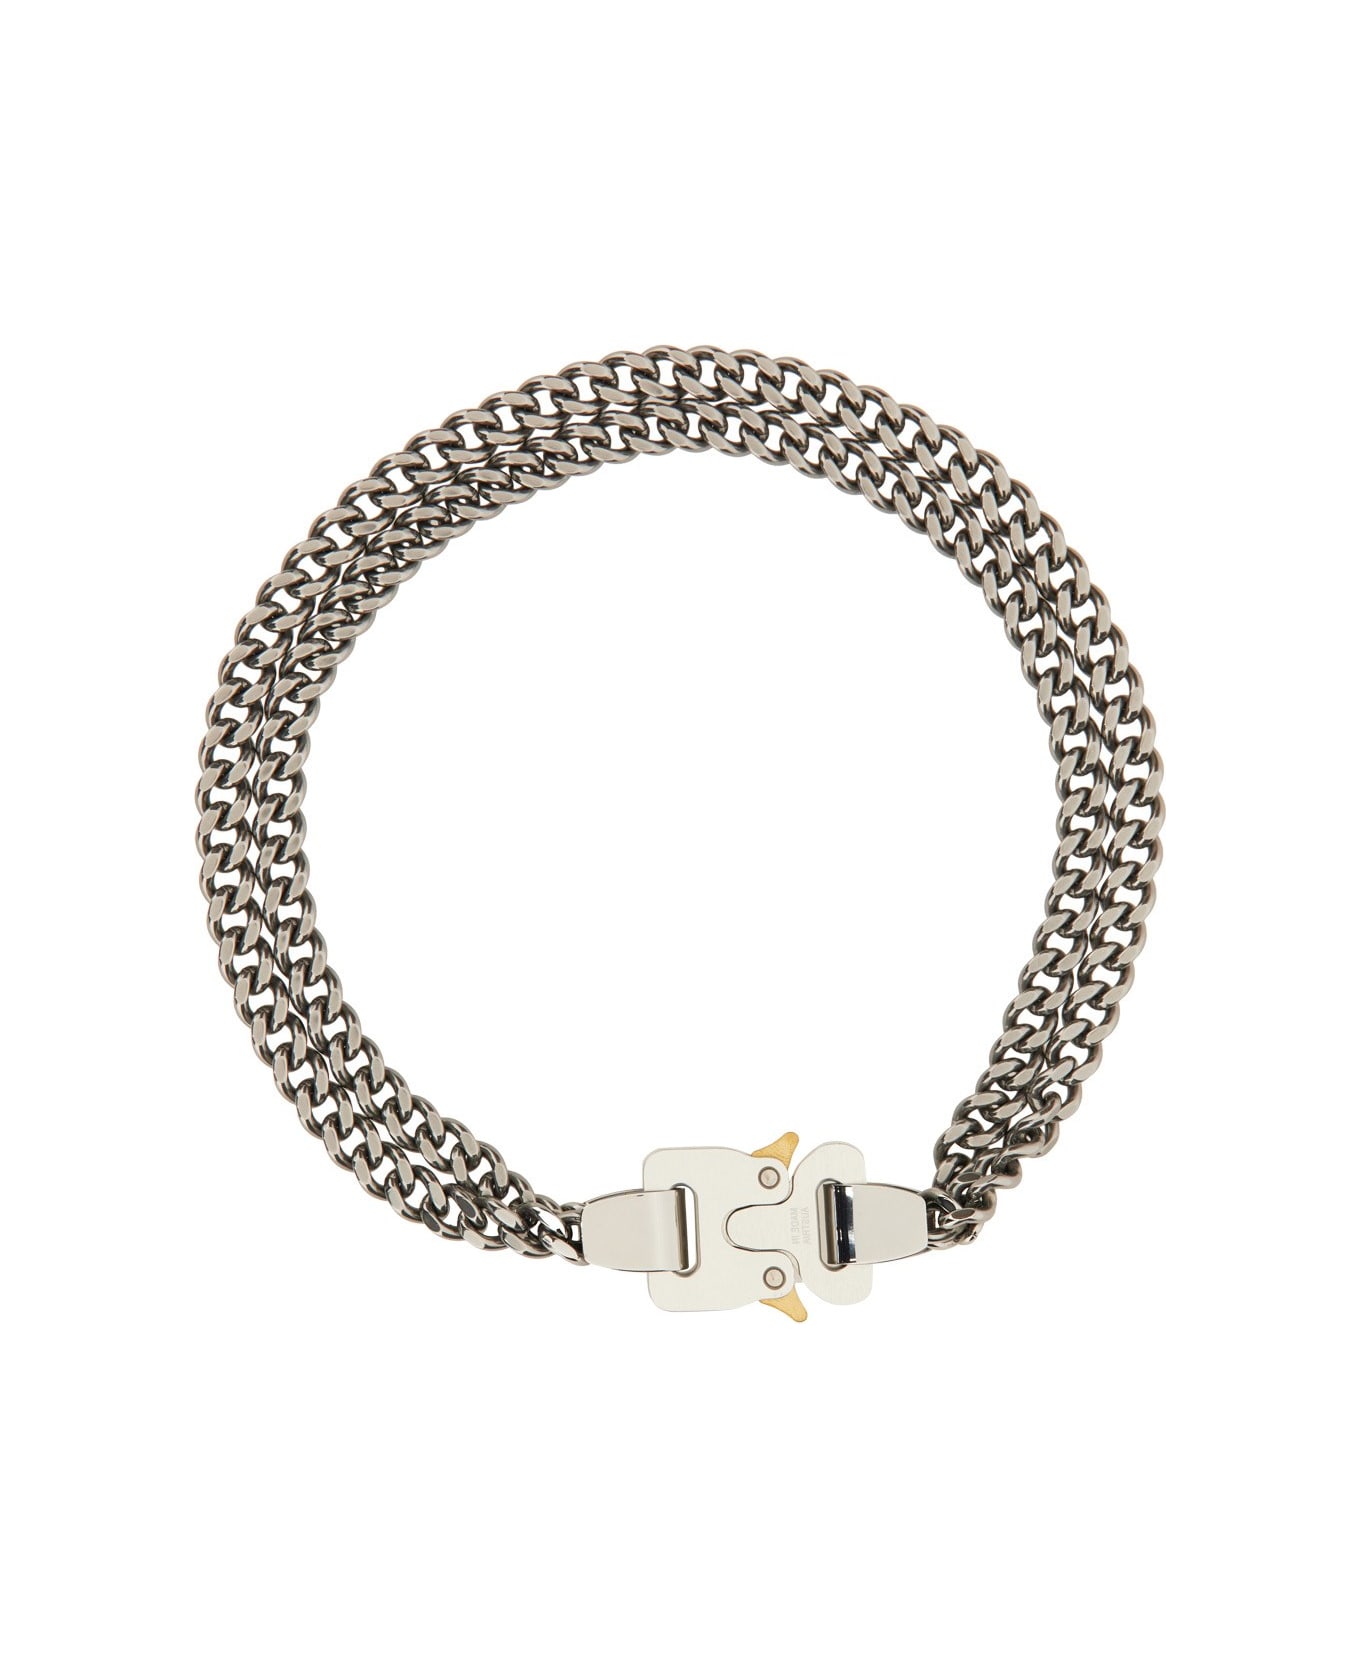 1017 ALYX 9SM 2x Chain Necklace - ARGENTO